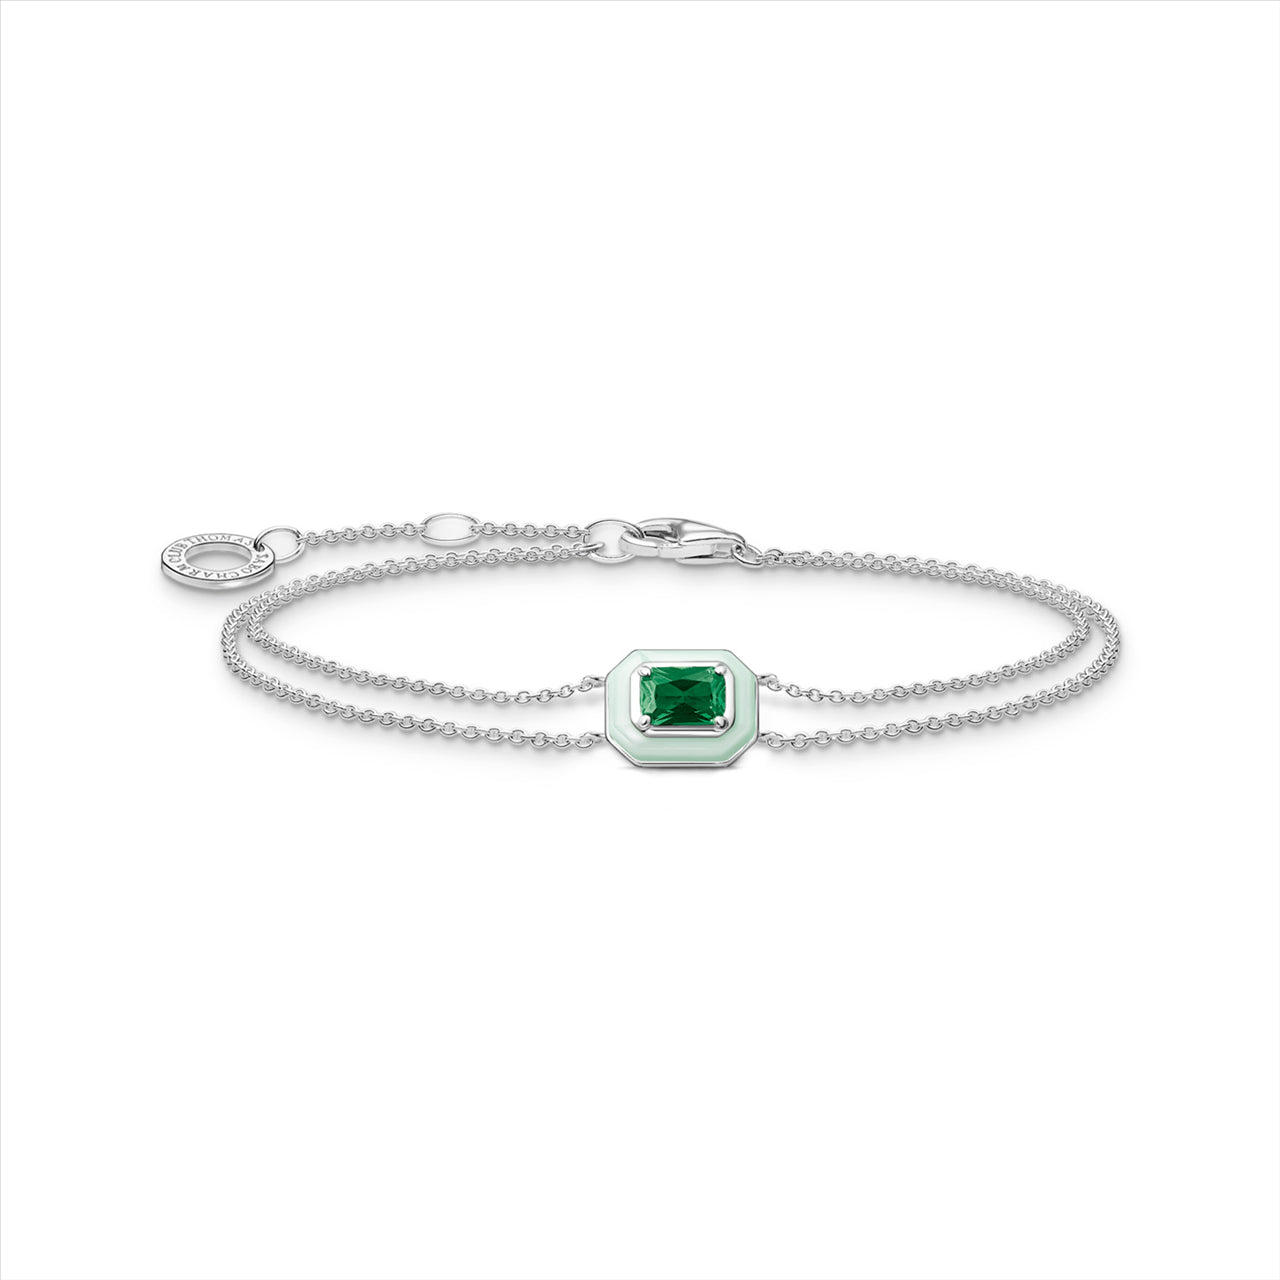 Thomas Sabo Octagonal Green Bracelet.